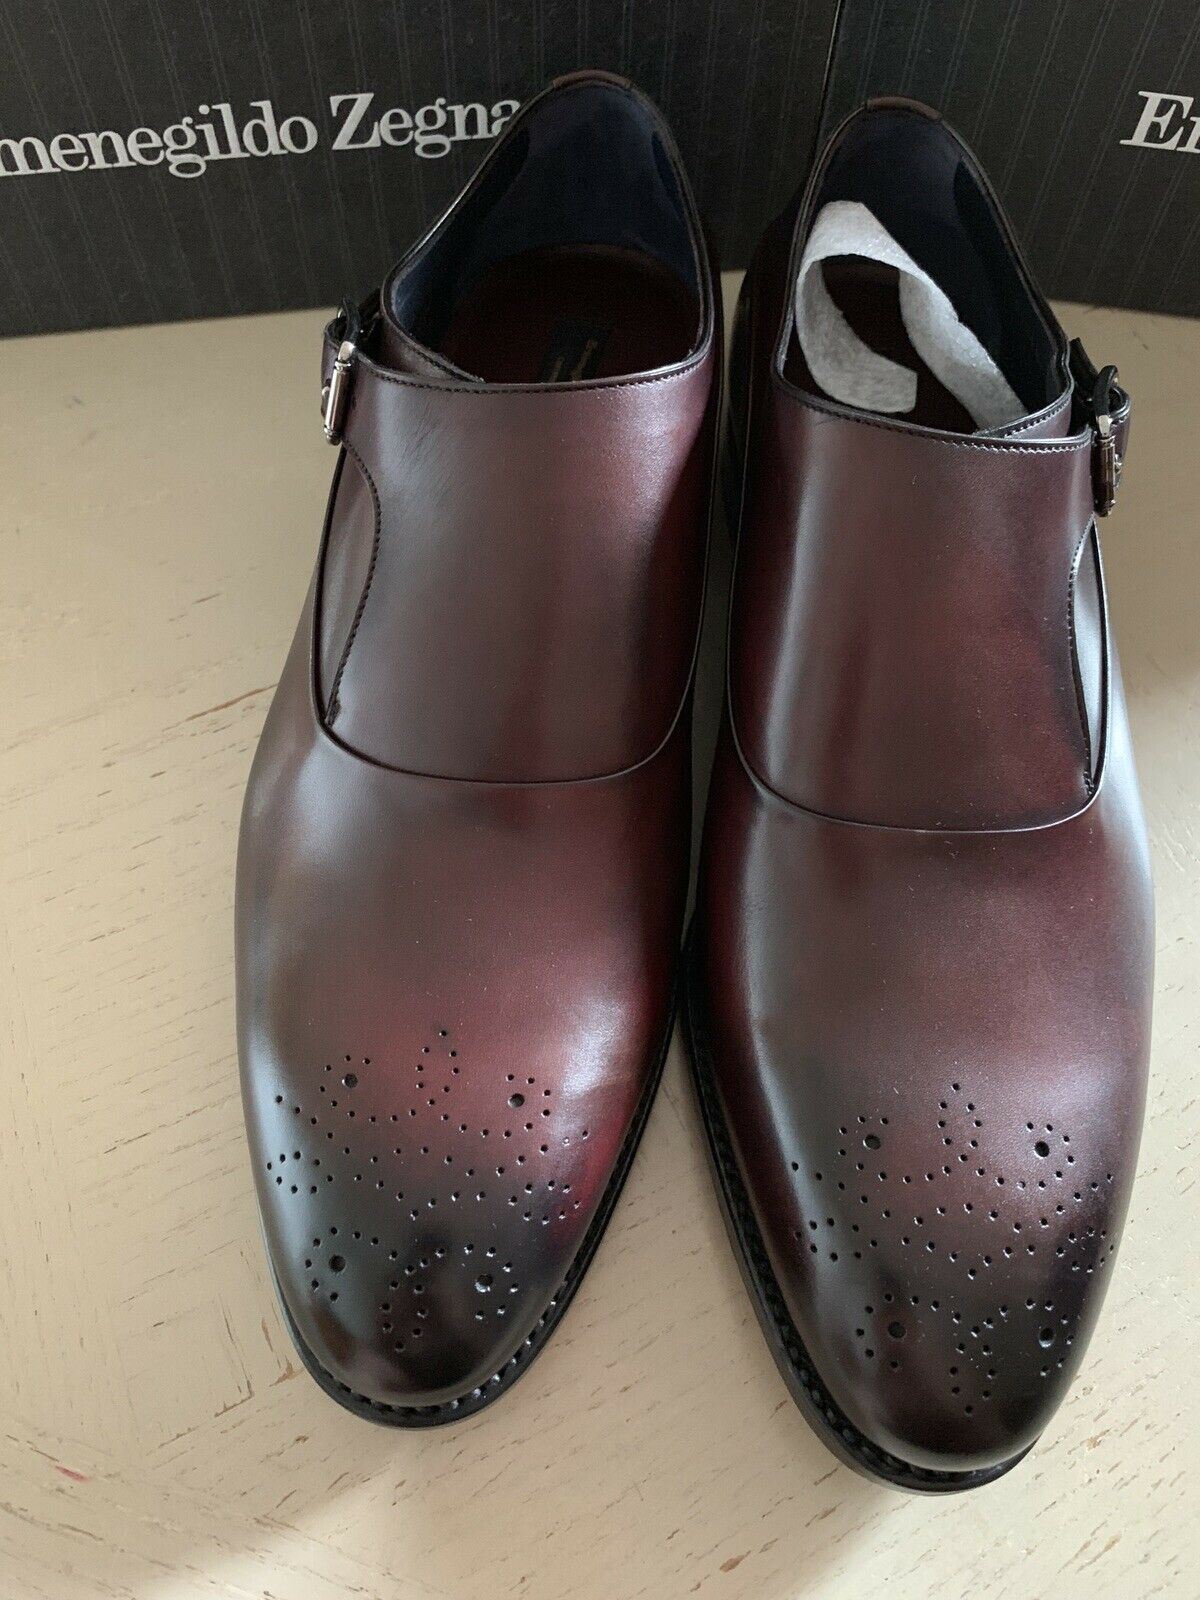 New $1350 Ermenegildo Zegna Couture Monk Brogues Leather Shoes Burgundy 10.5 US